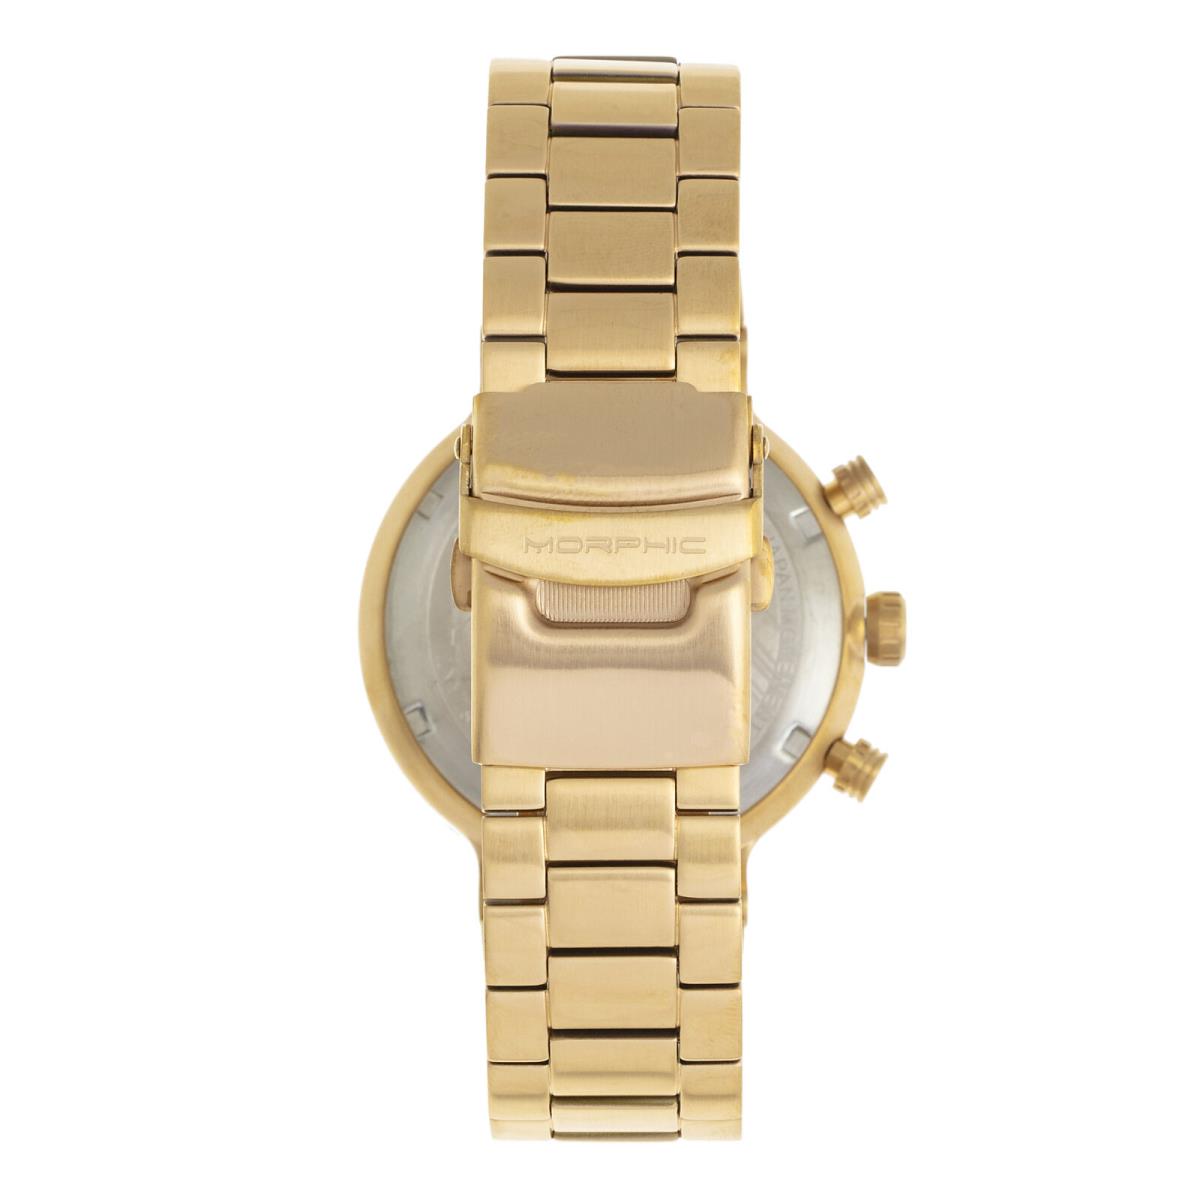 Morphic M78 Series Chronograph Bracelet Watch - Gold/black